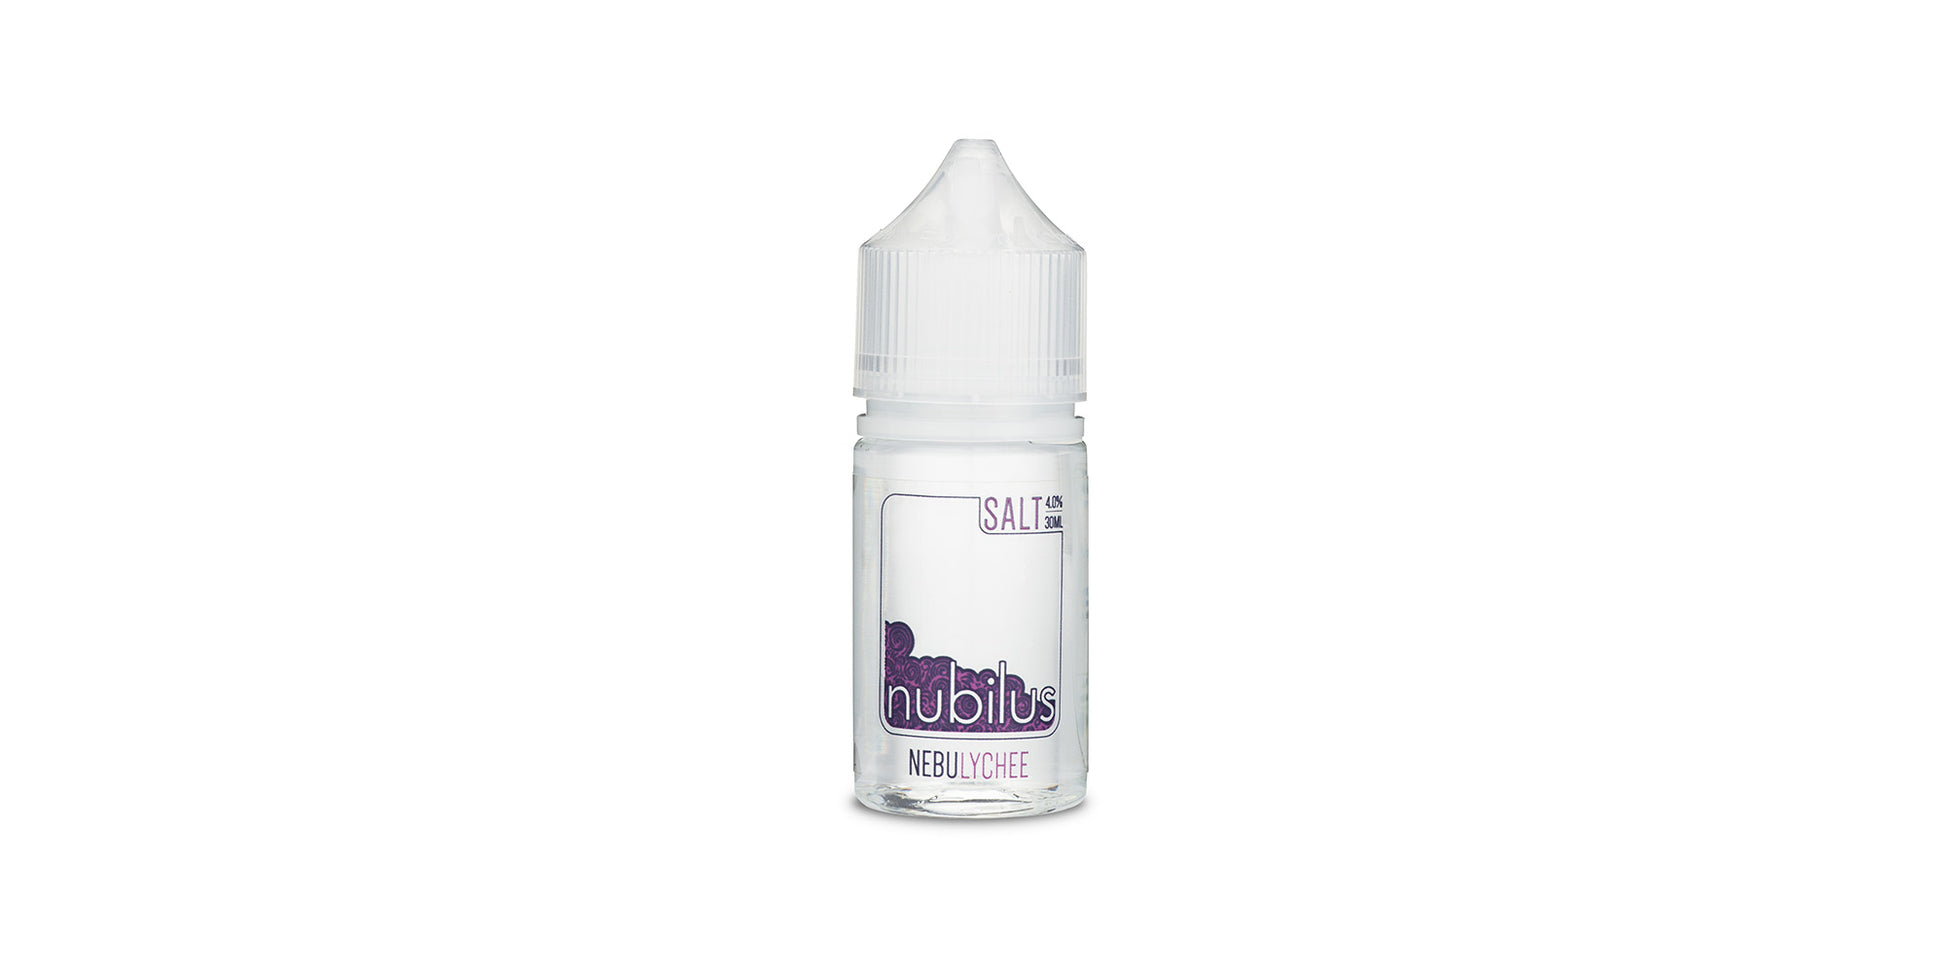 Nubilus - Nebulychee, Nicotine Salt